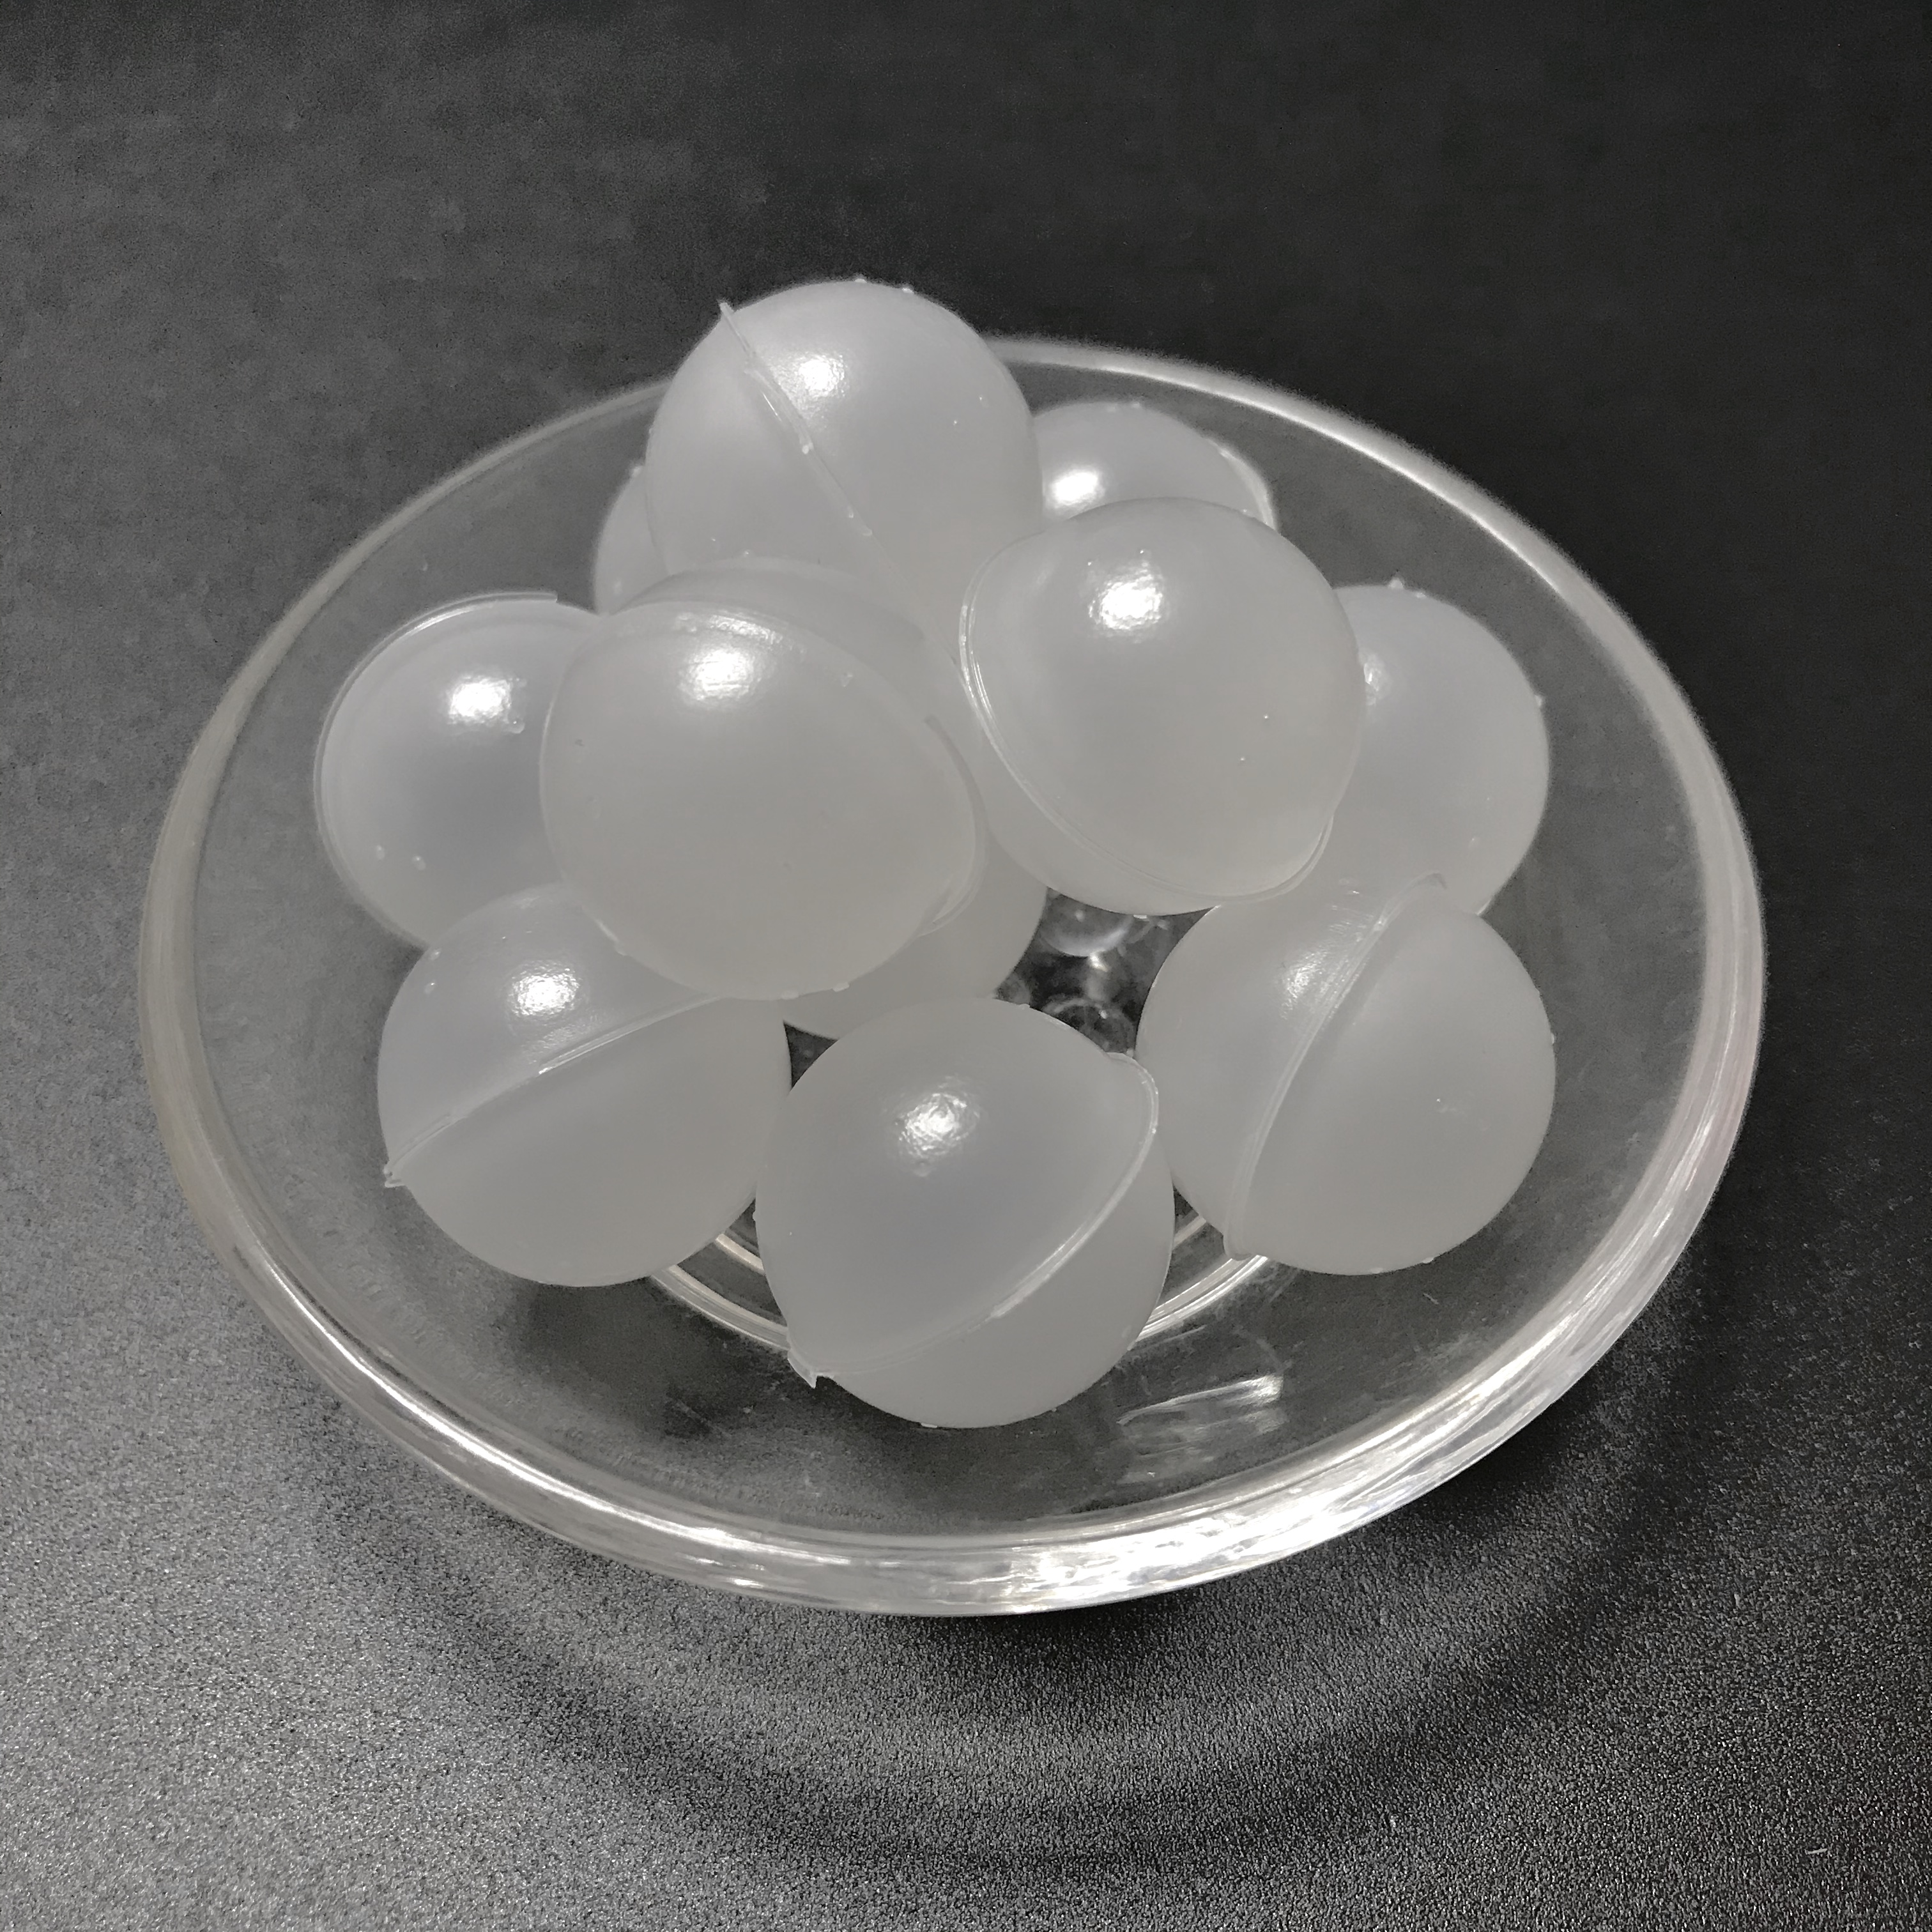 Protección solar de bola de plástico de flotación hueca transparente de PP